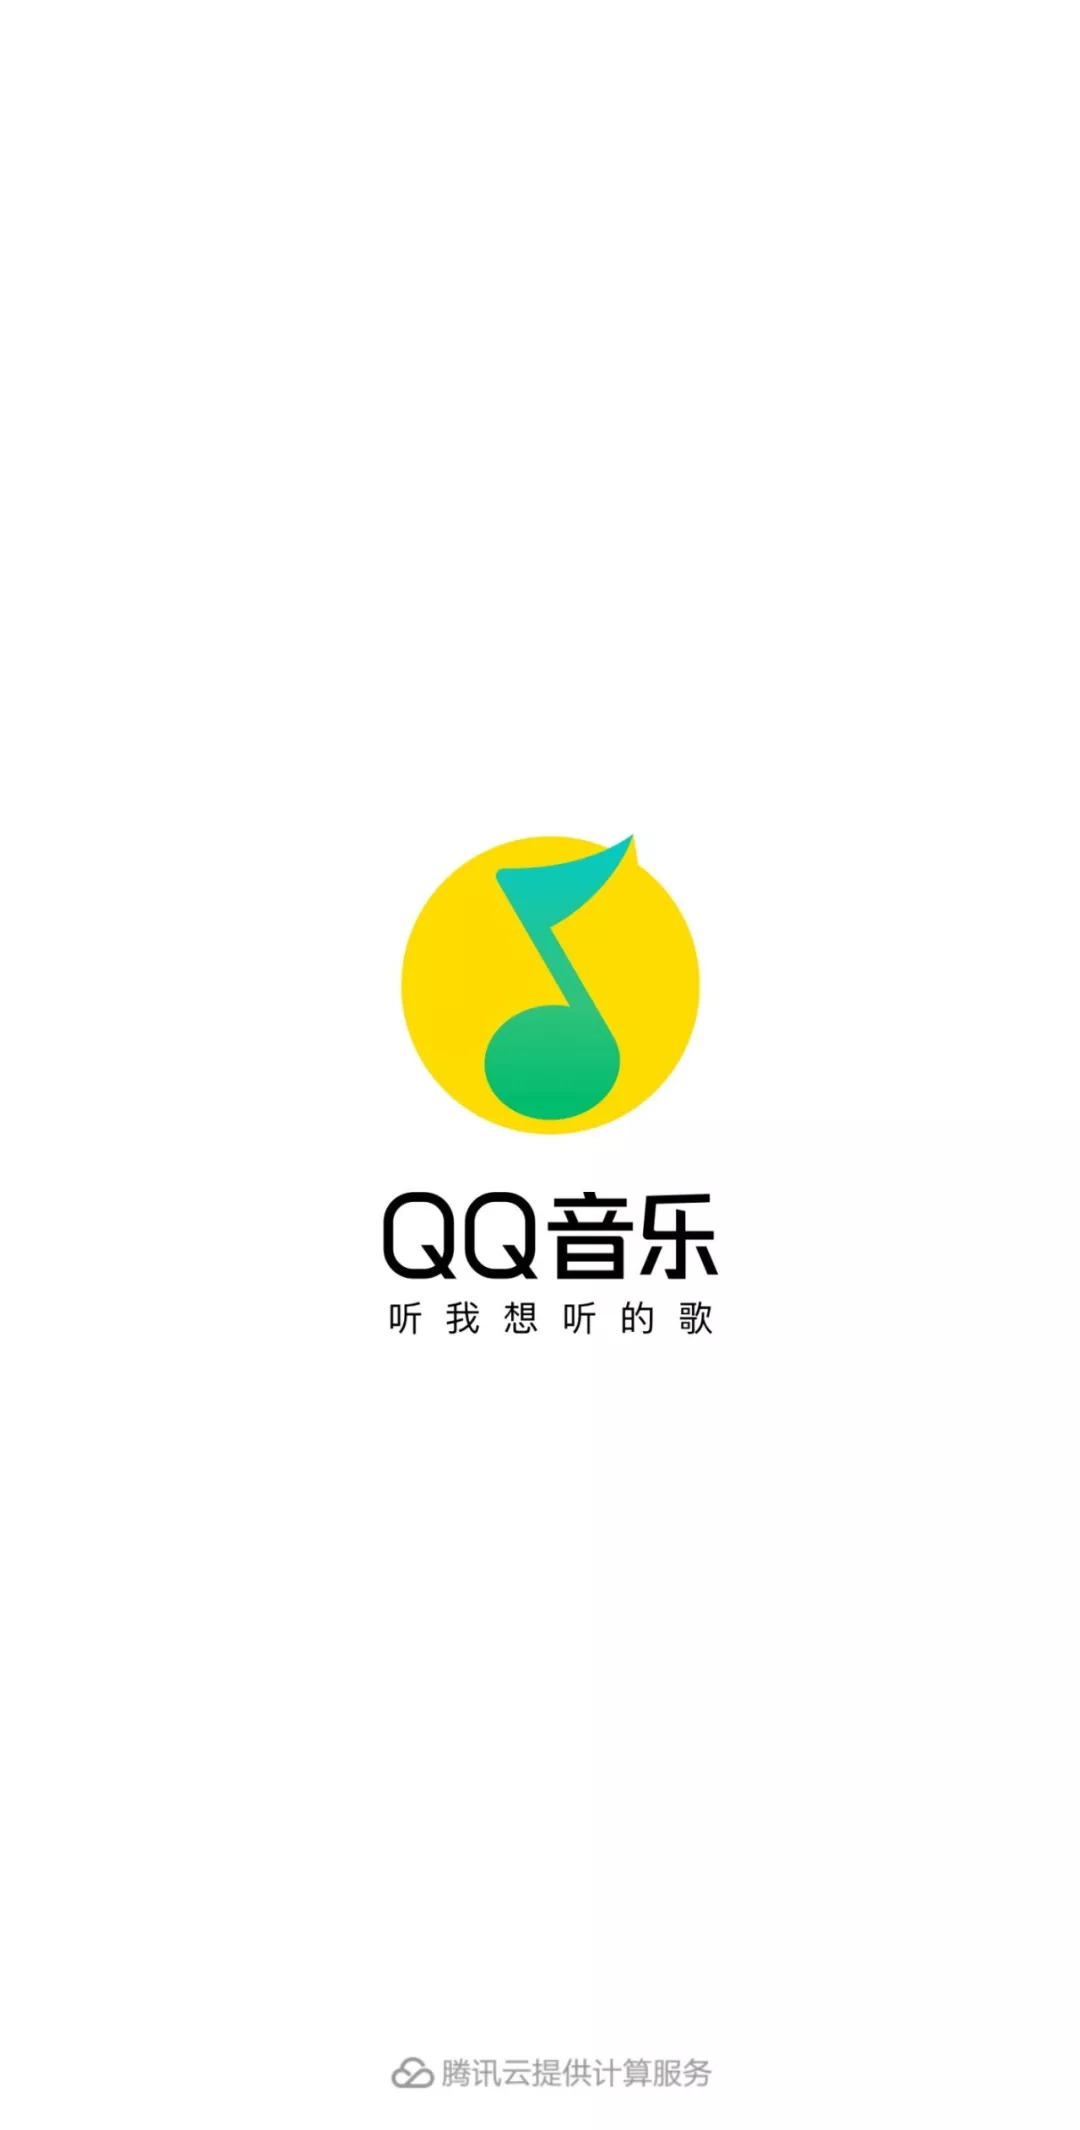 qq音乐换logo了!